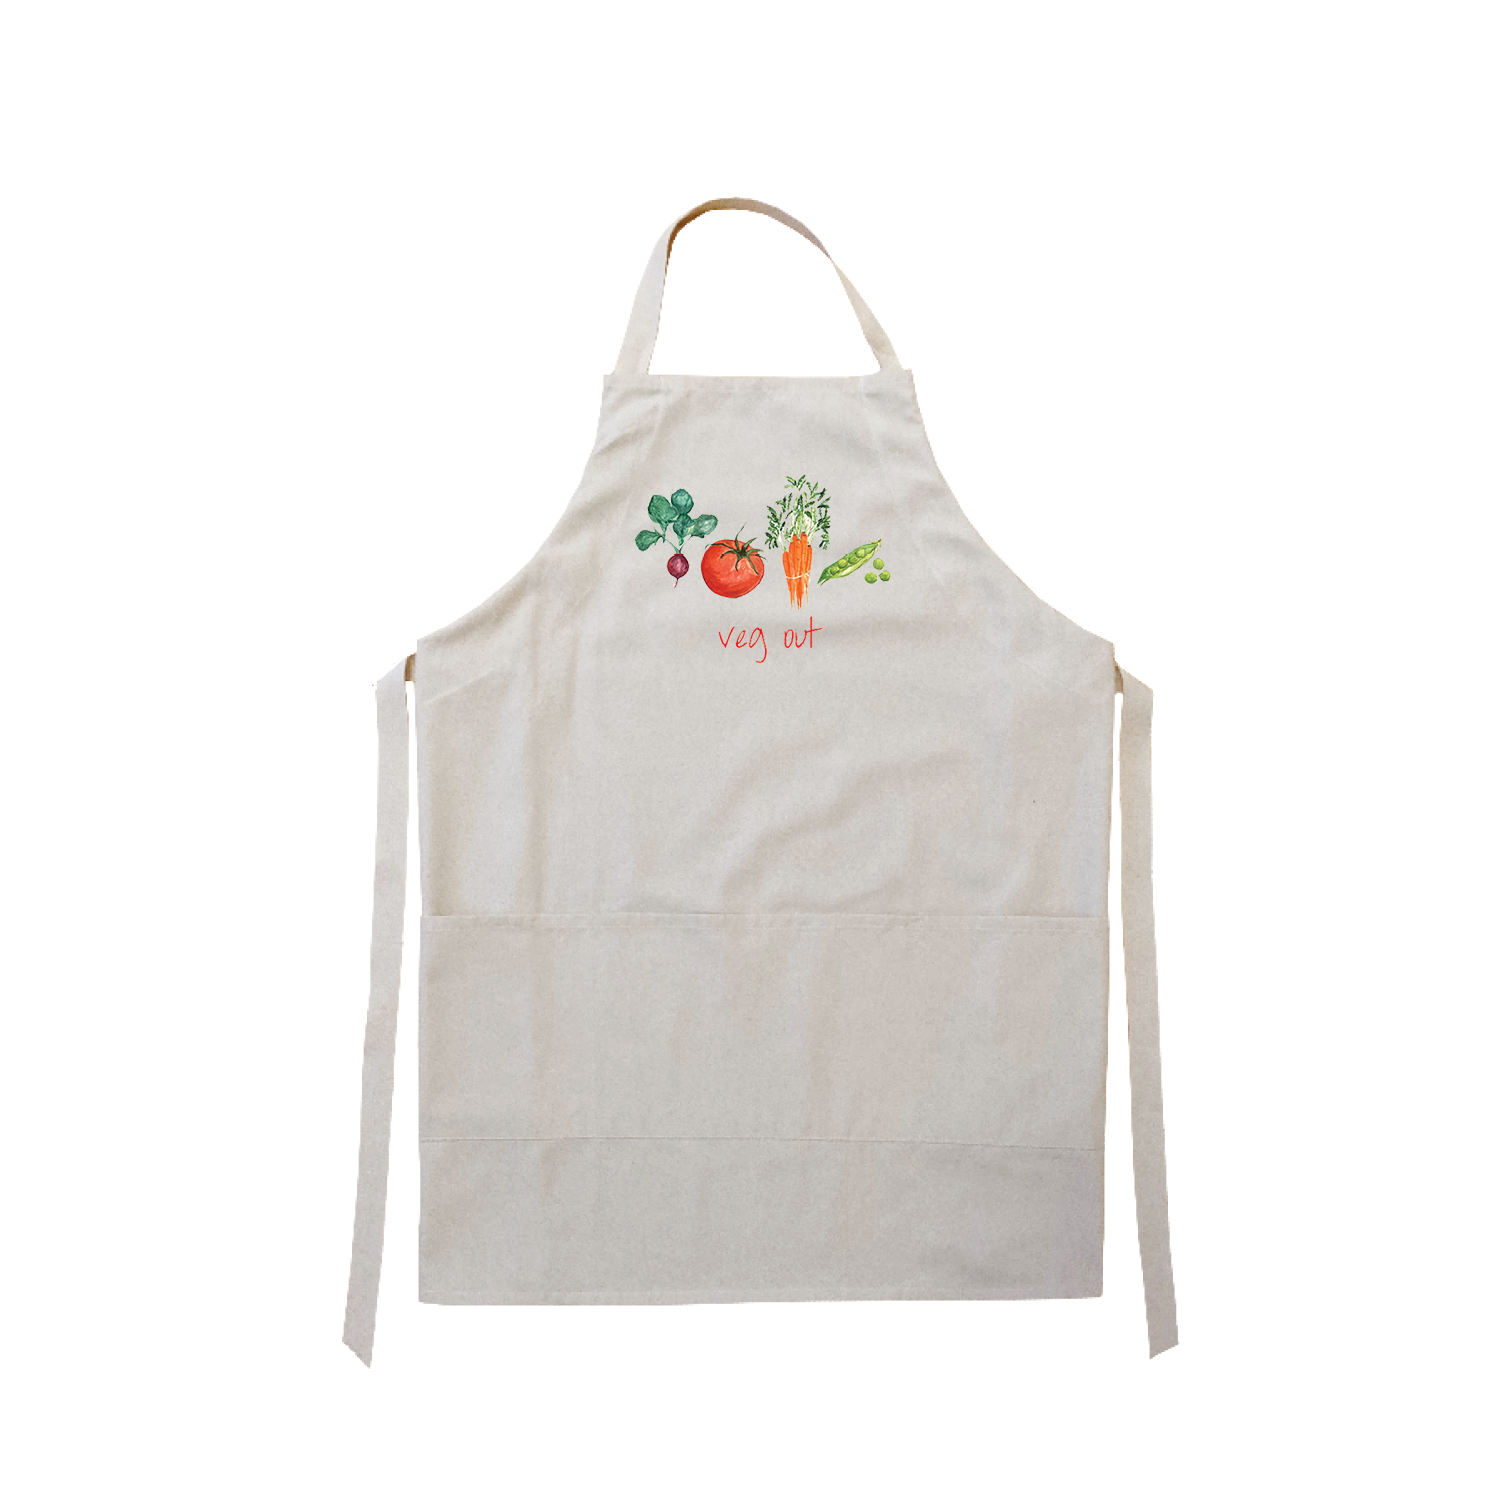 veg out apron